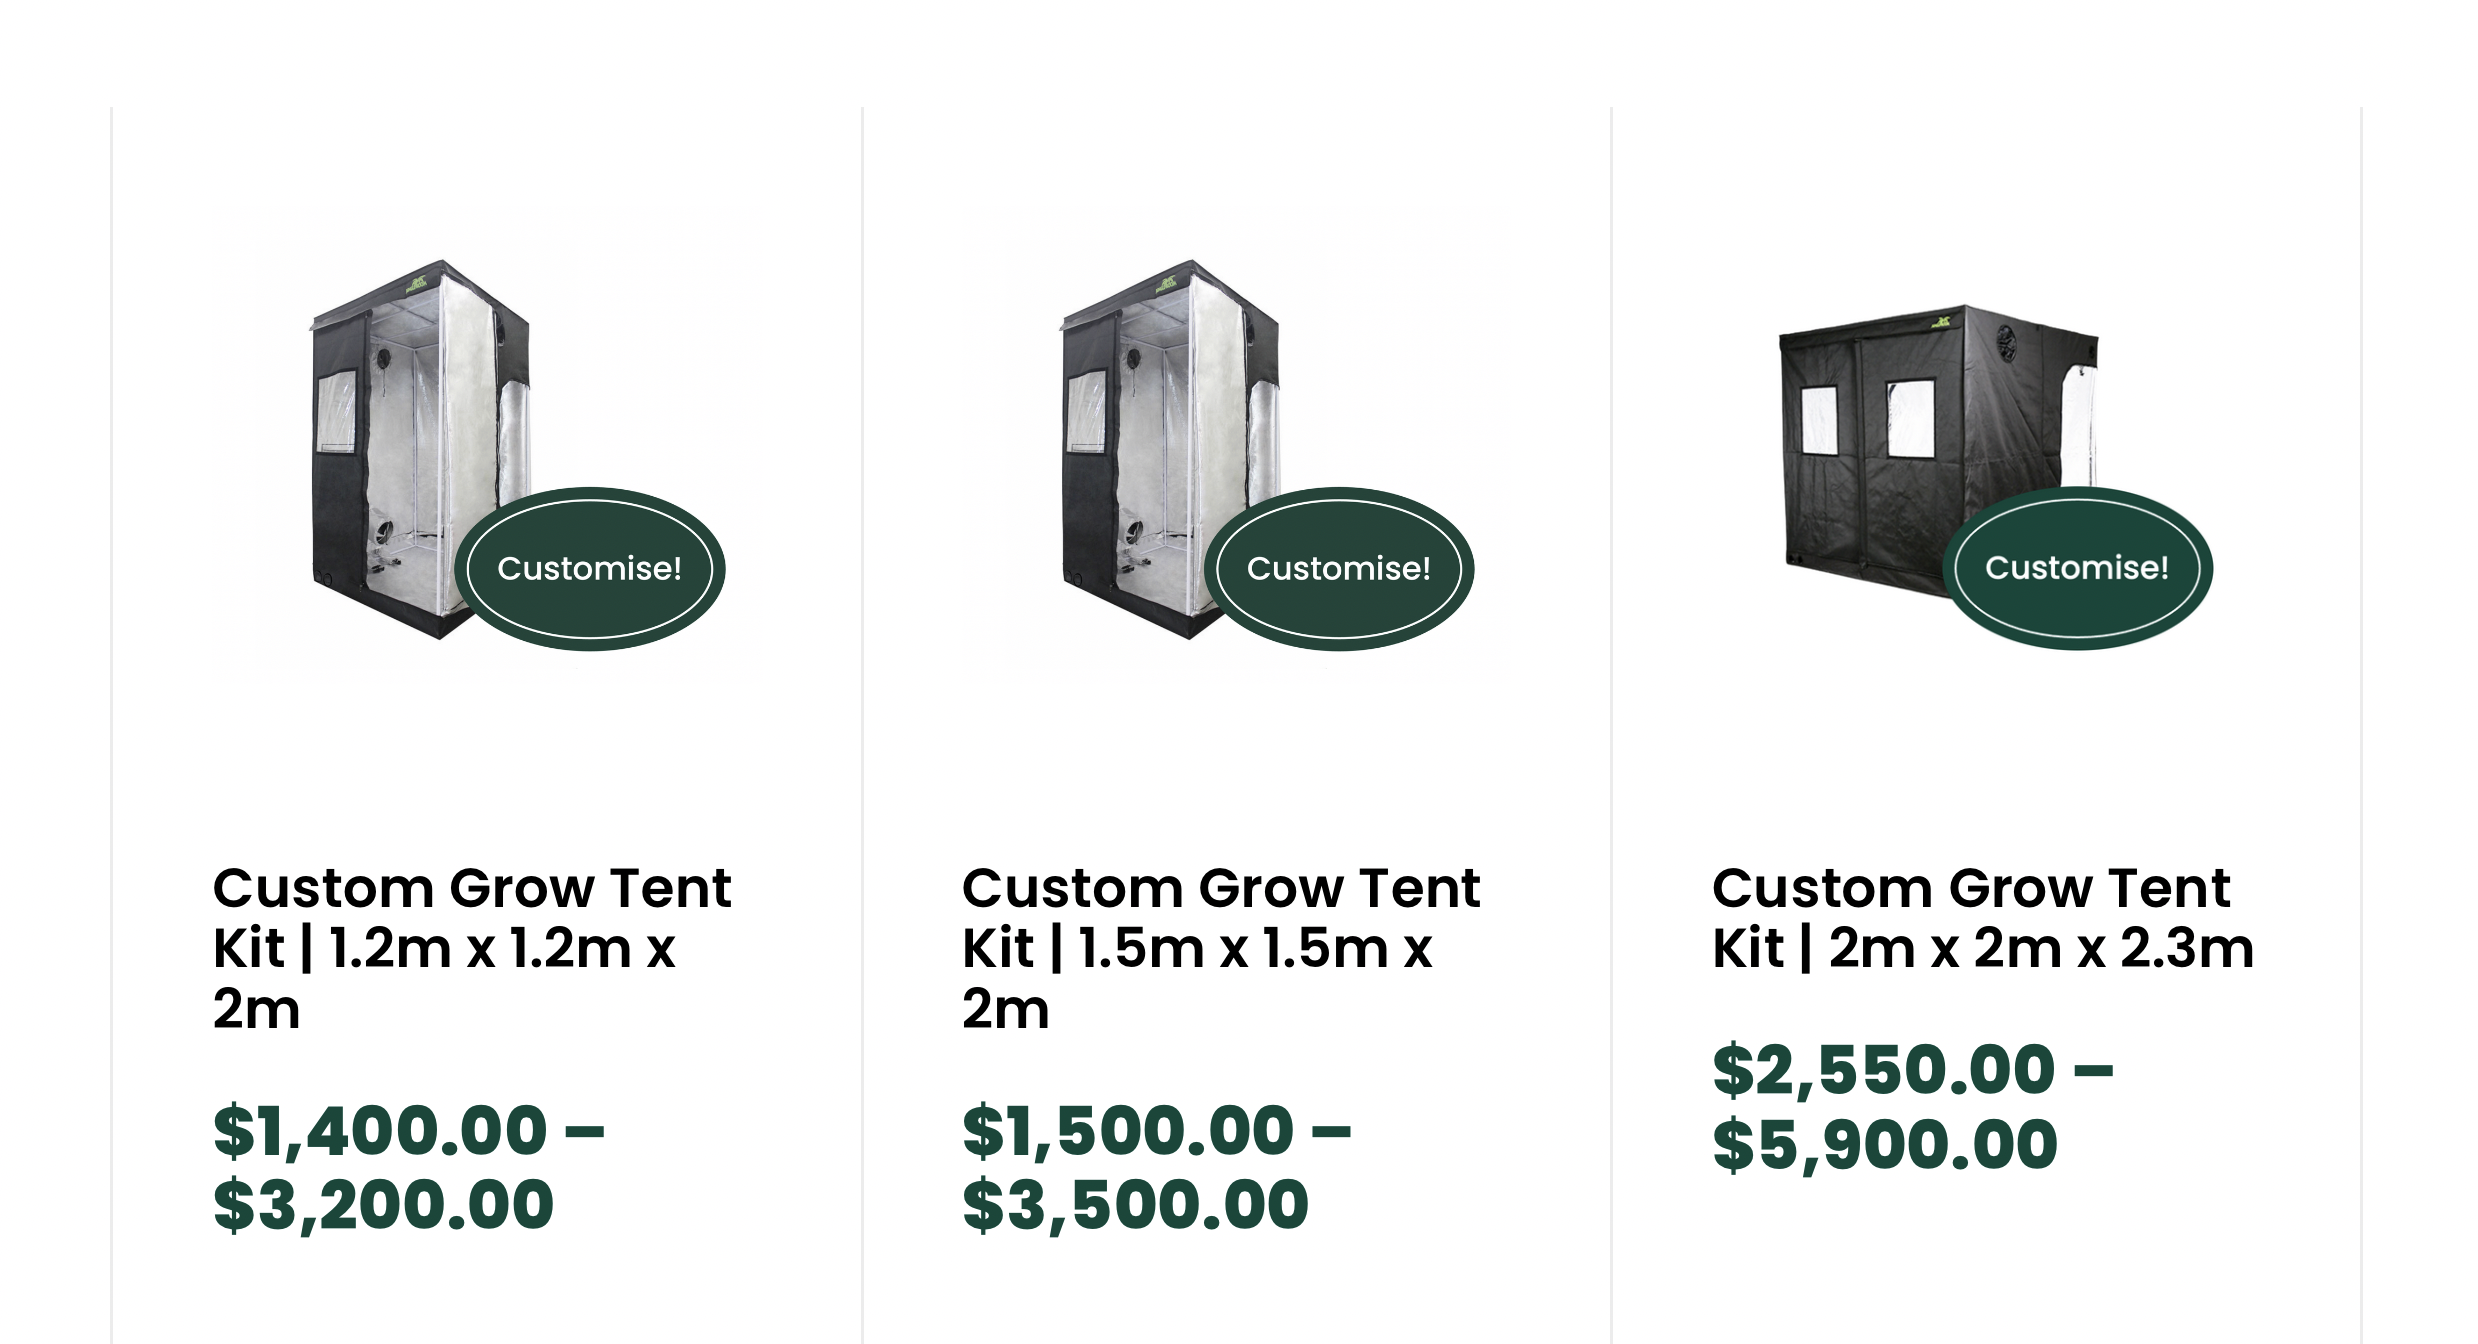 Custome grow tent kits